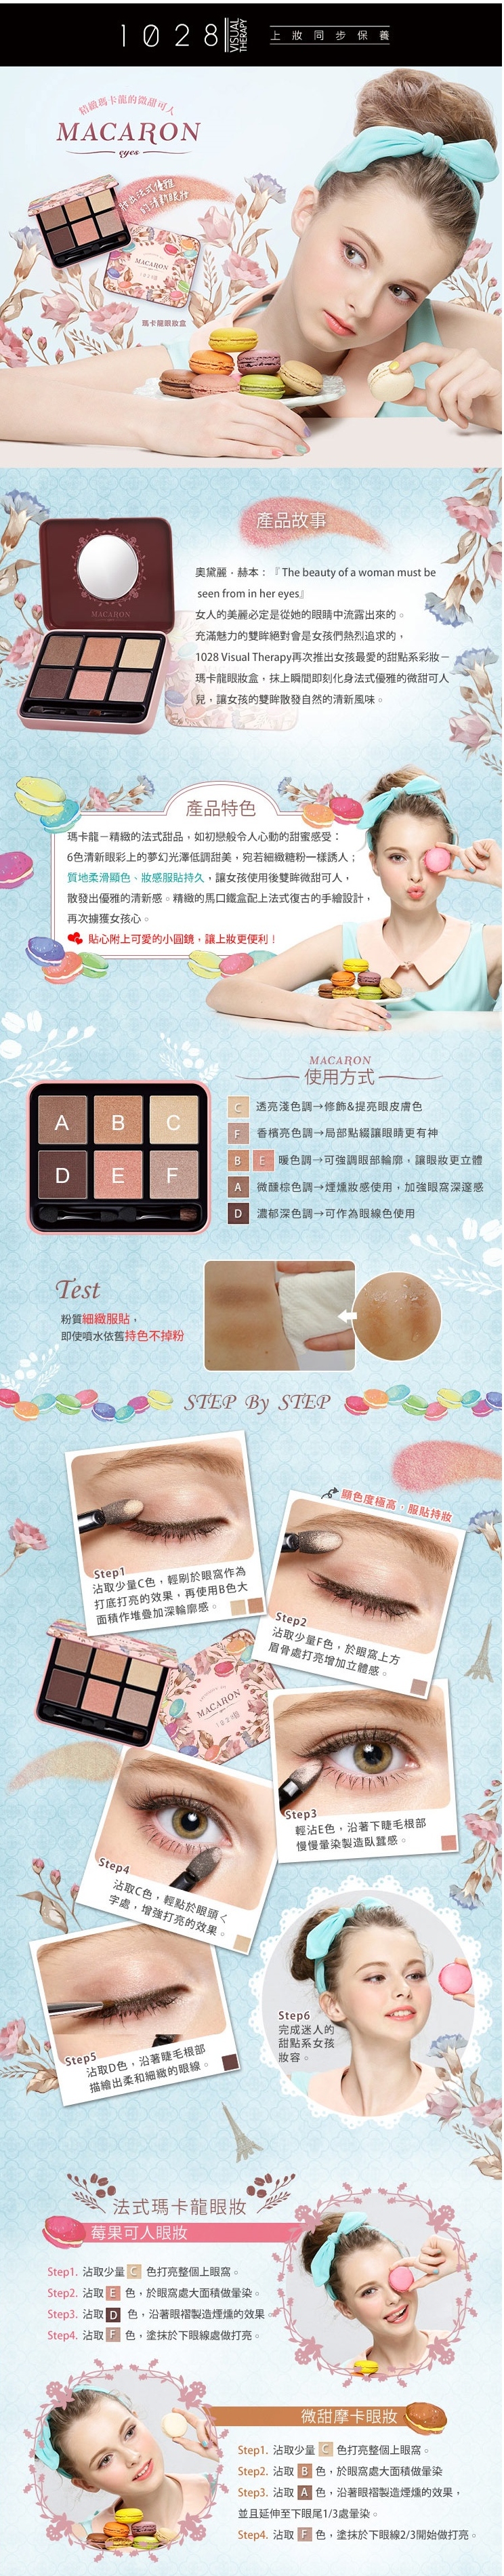 1028-visual-therapy-macaron-eyeshadow-kit-2.1gx6-1.jpg